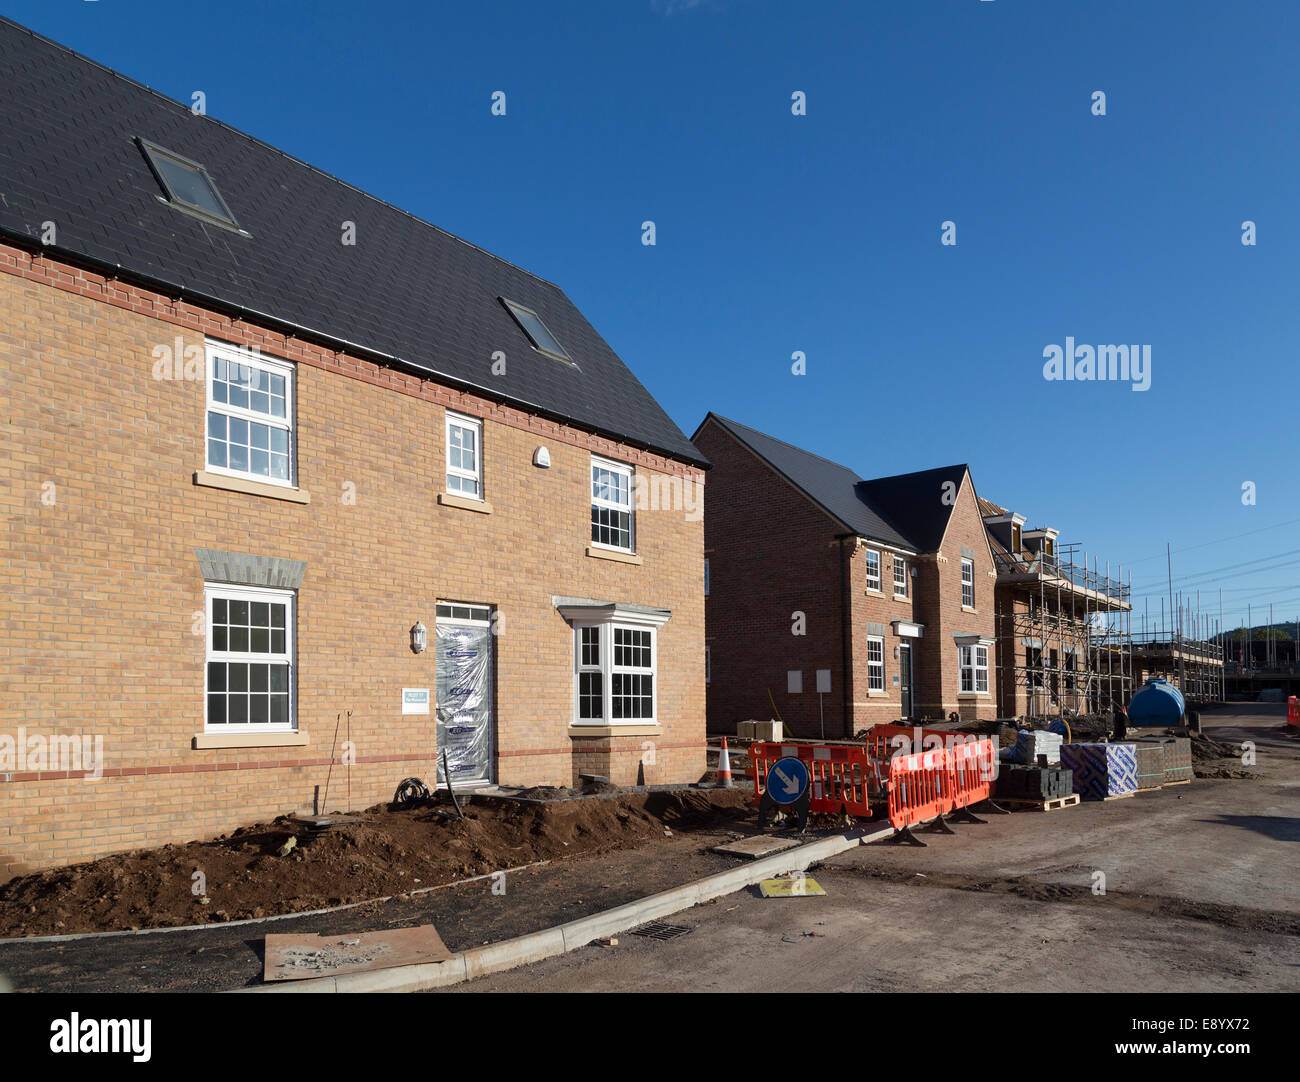 New build houses on new estate, Llanfoist, Abergavenny, Wales, UK Stock Photo